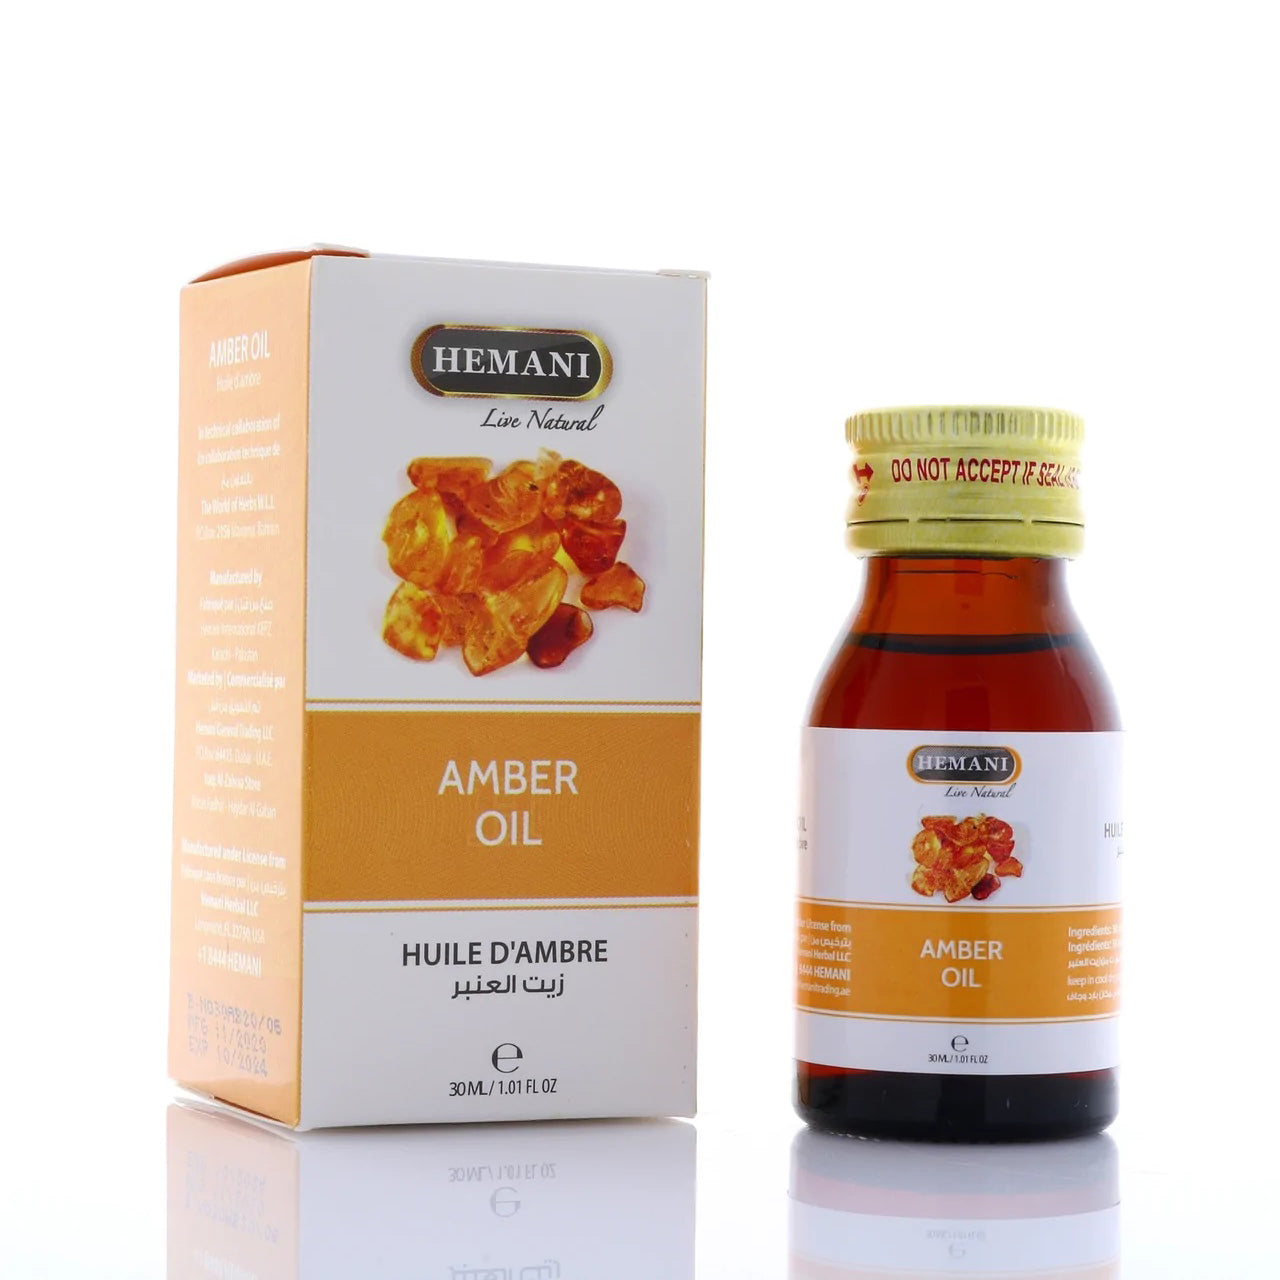 Hemani - Amber Oil, 30ml